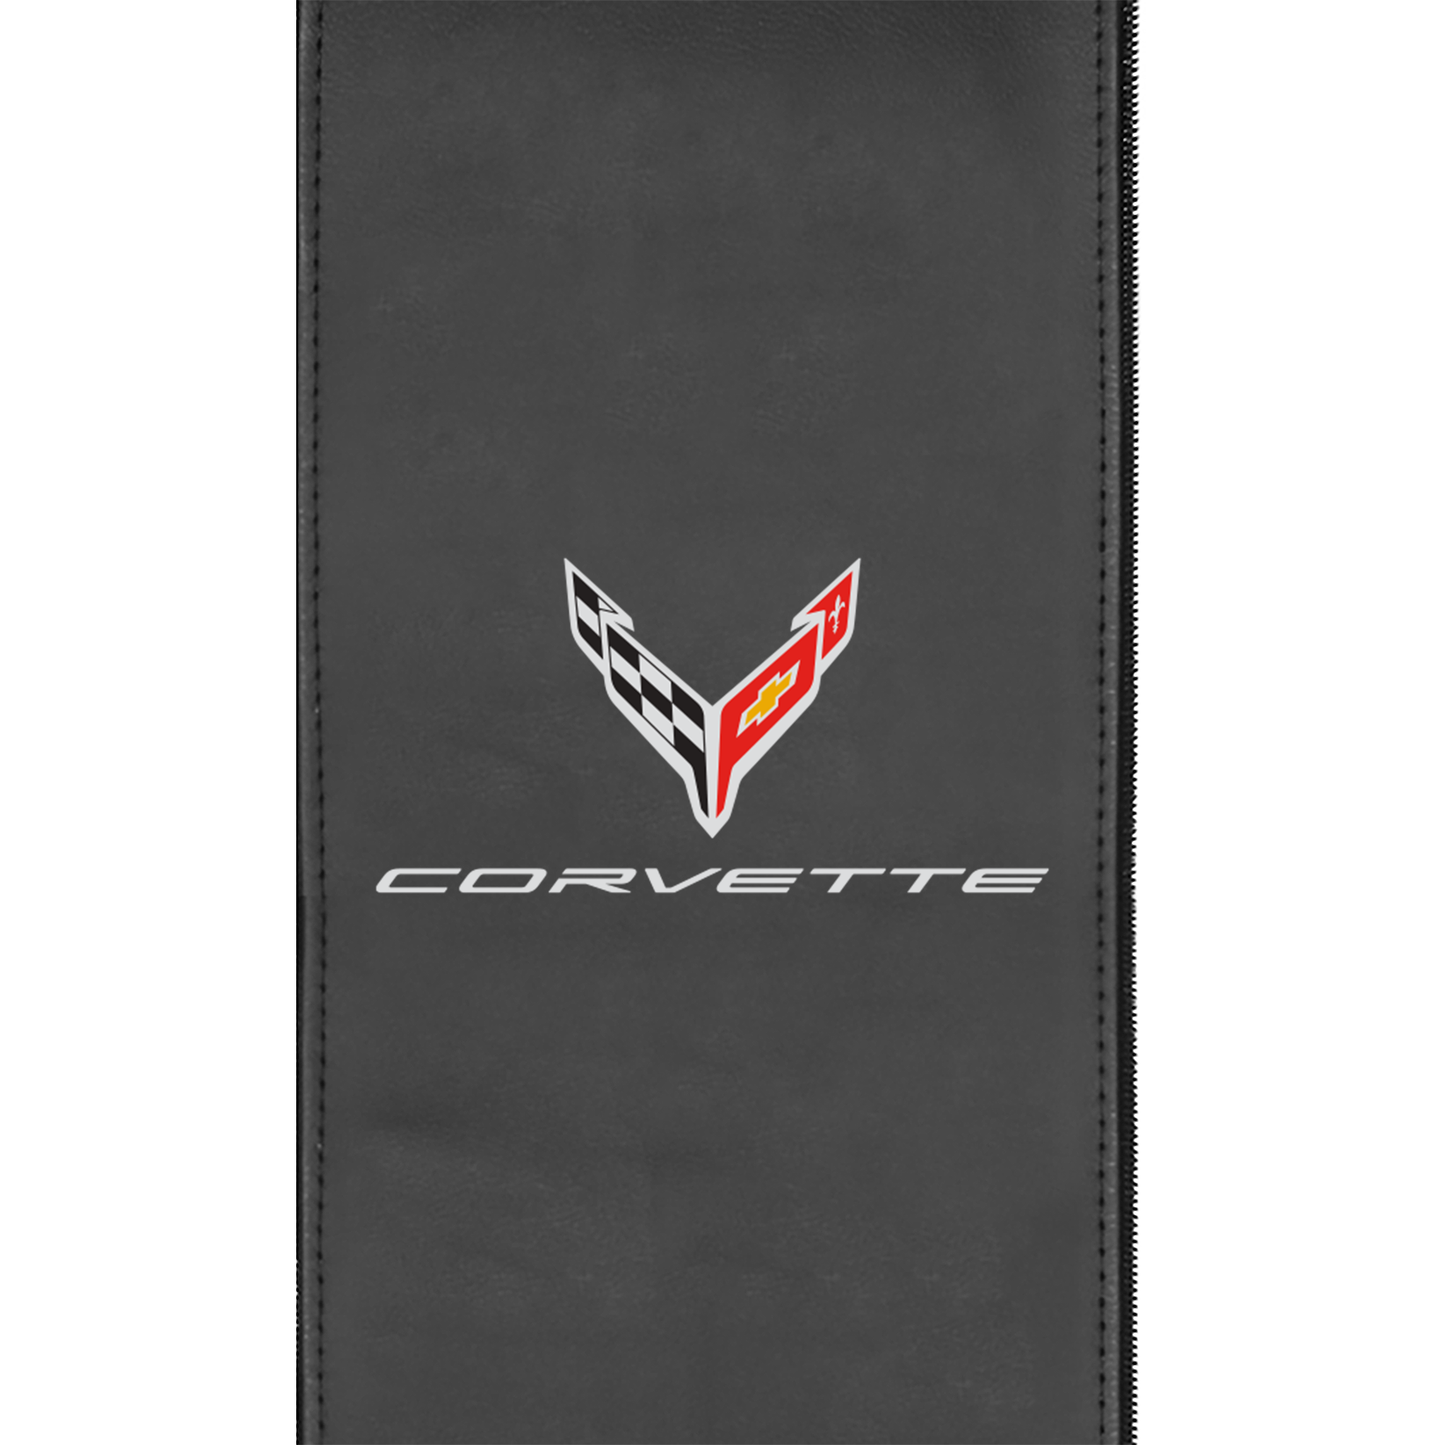 Silver Loveseat with Corvette Signature Logo